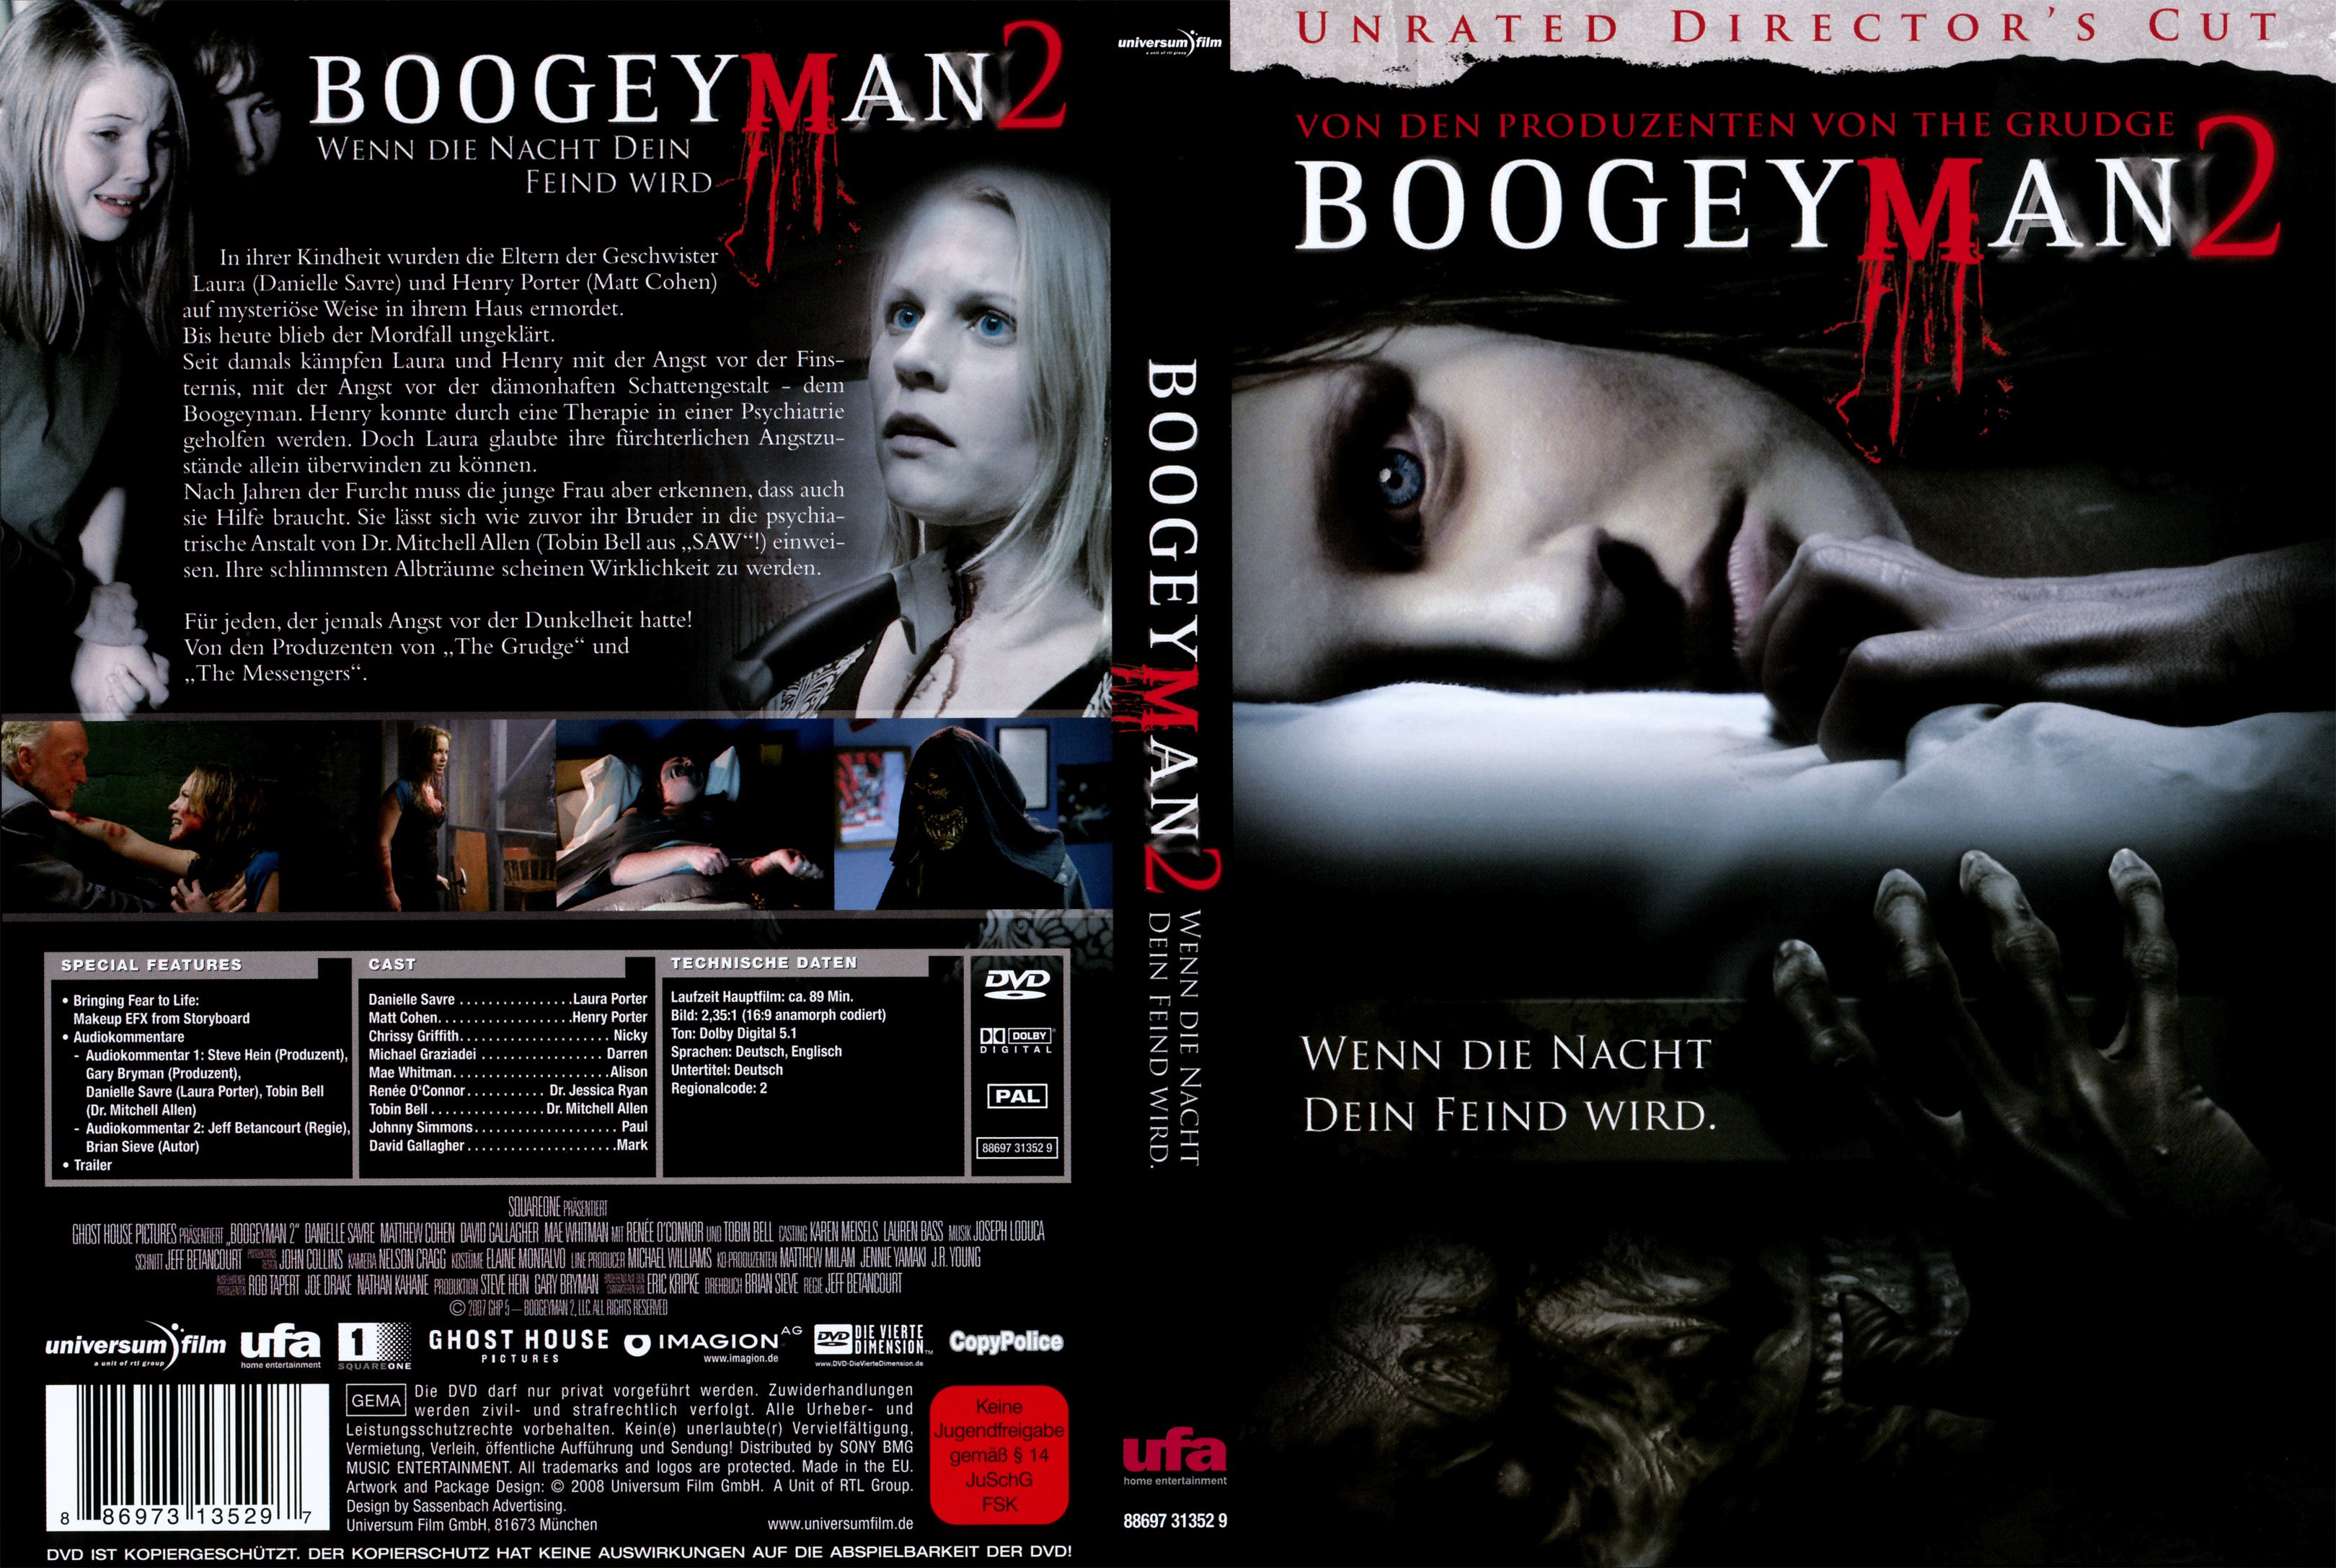 Boogeyman 2 German DVD Covers 